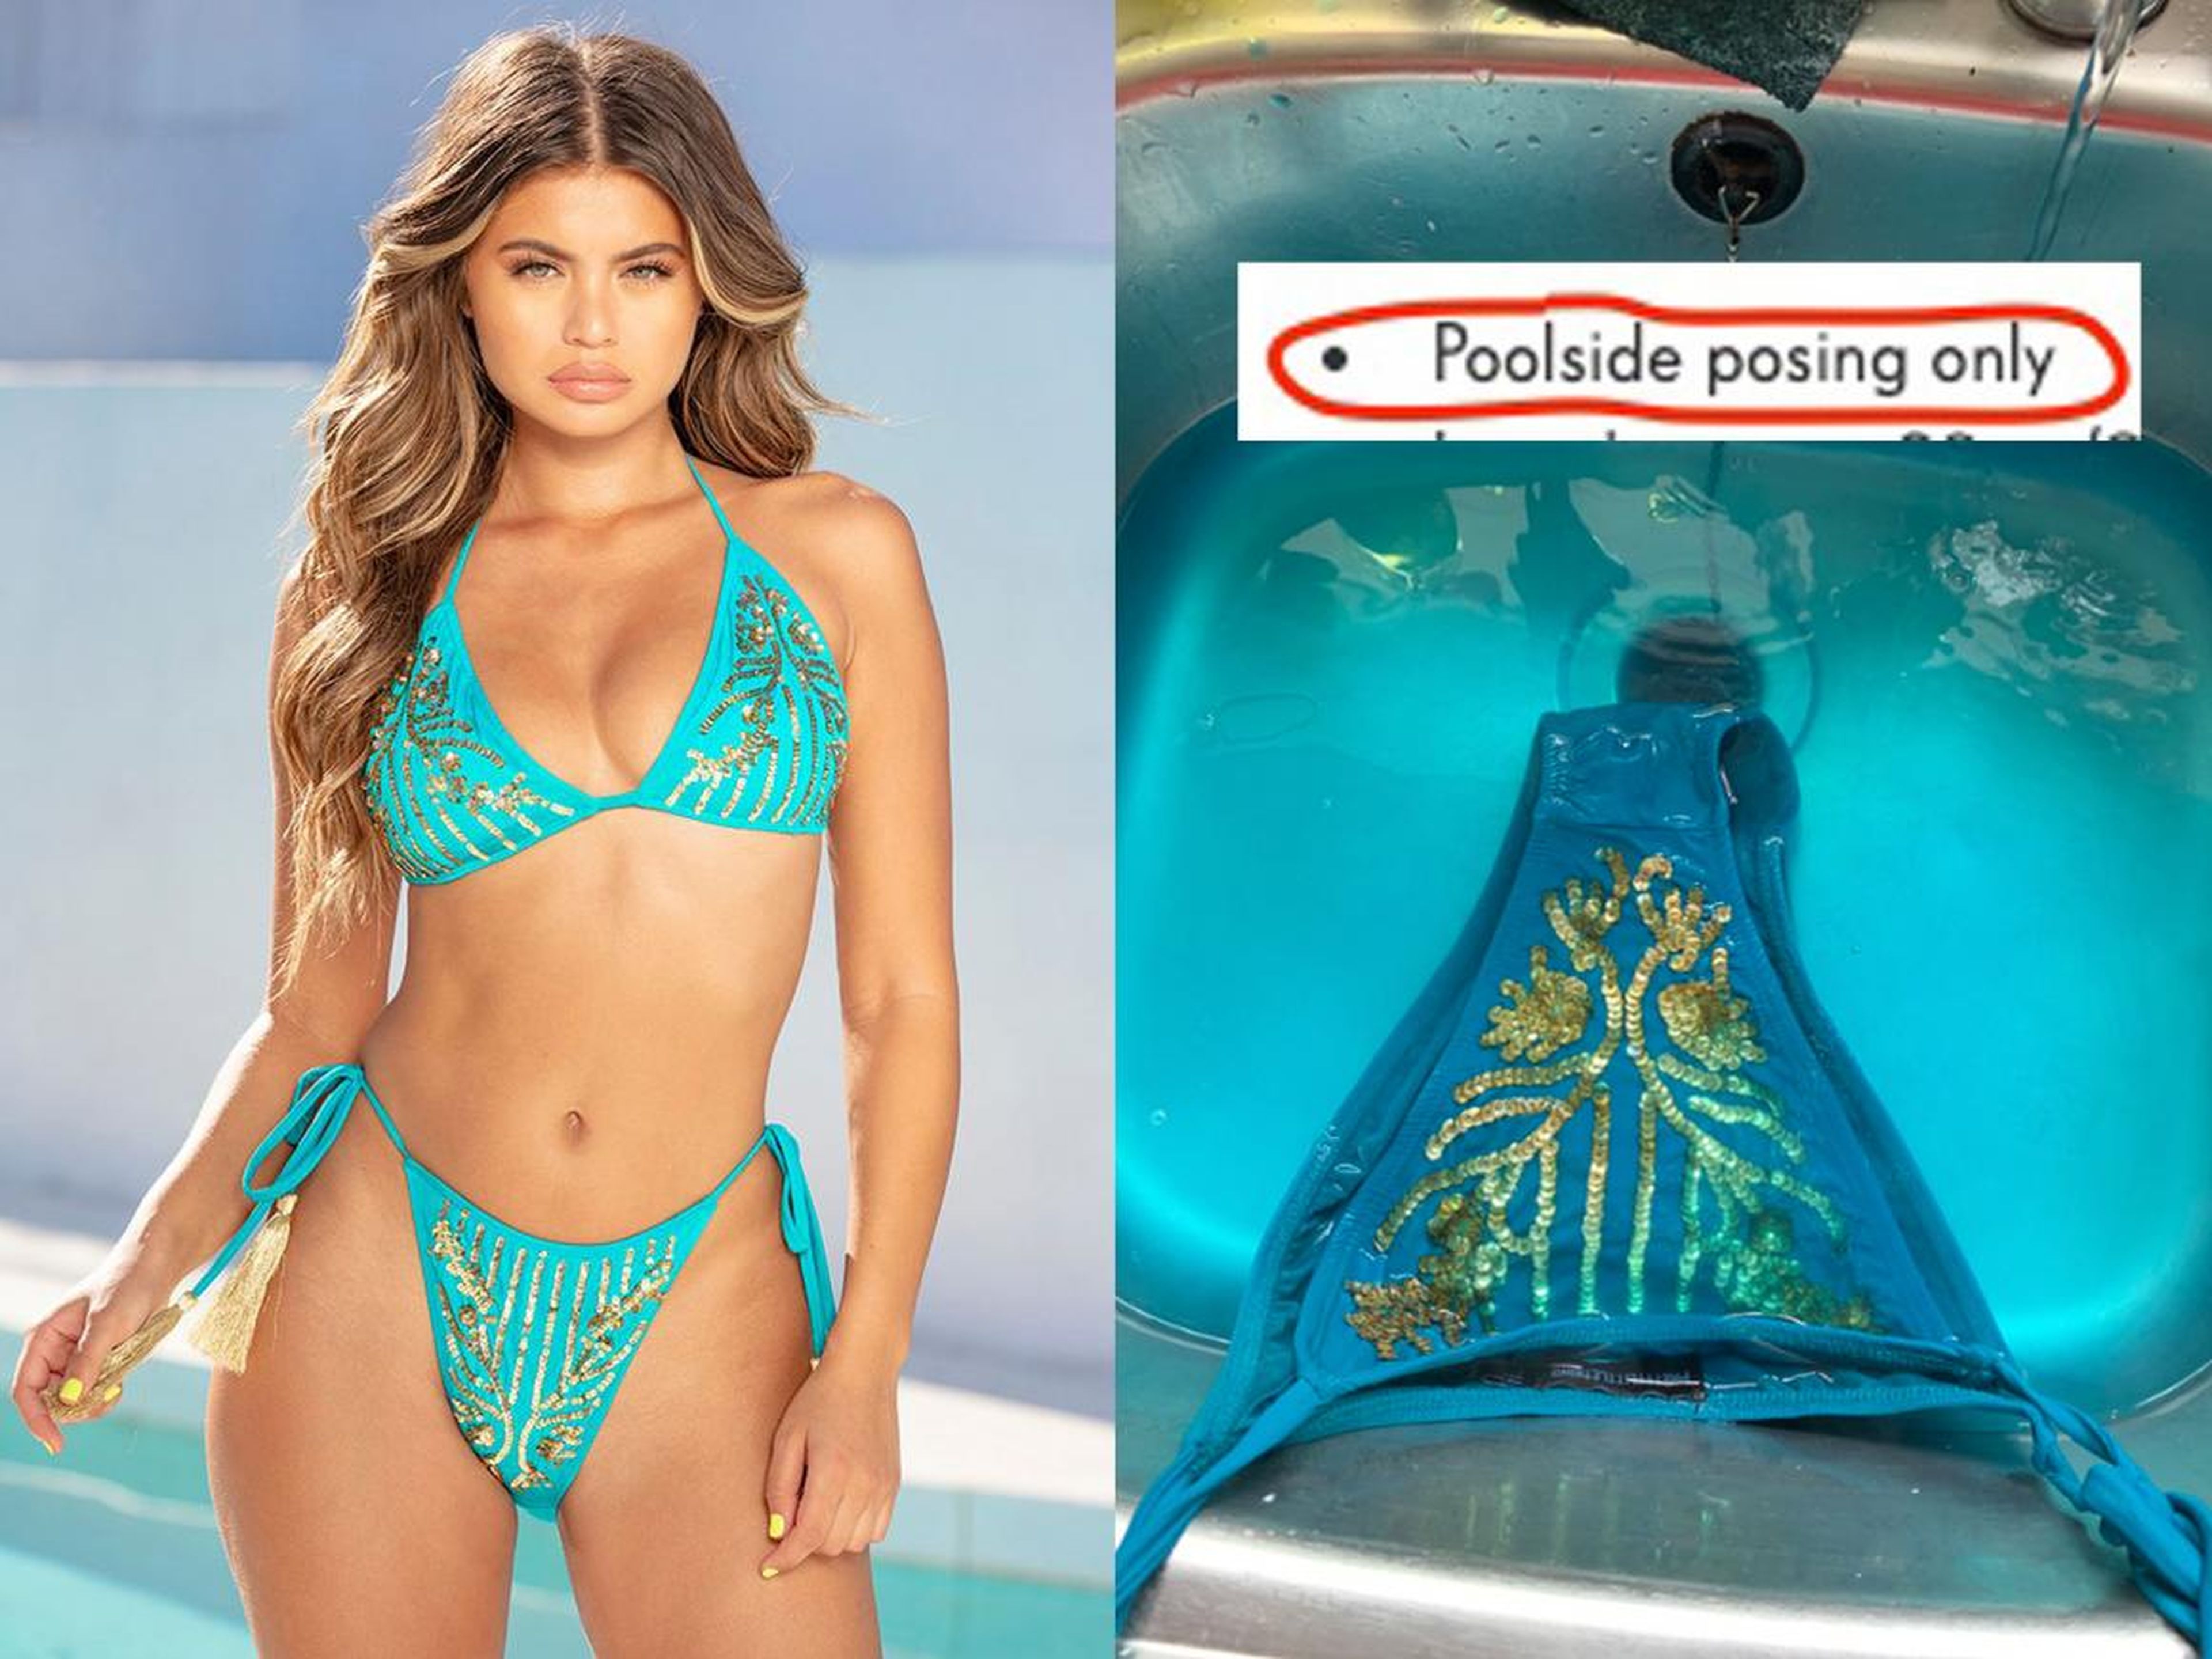 Este bikini es para "posar junto a la piscina".